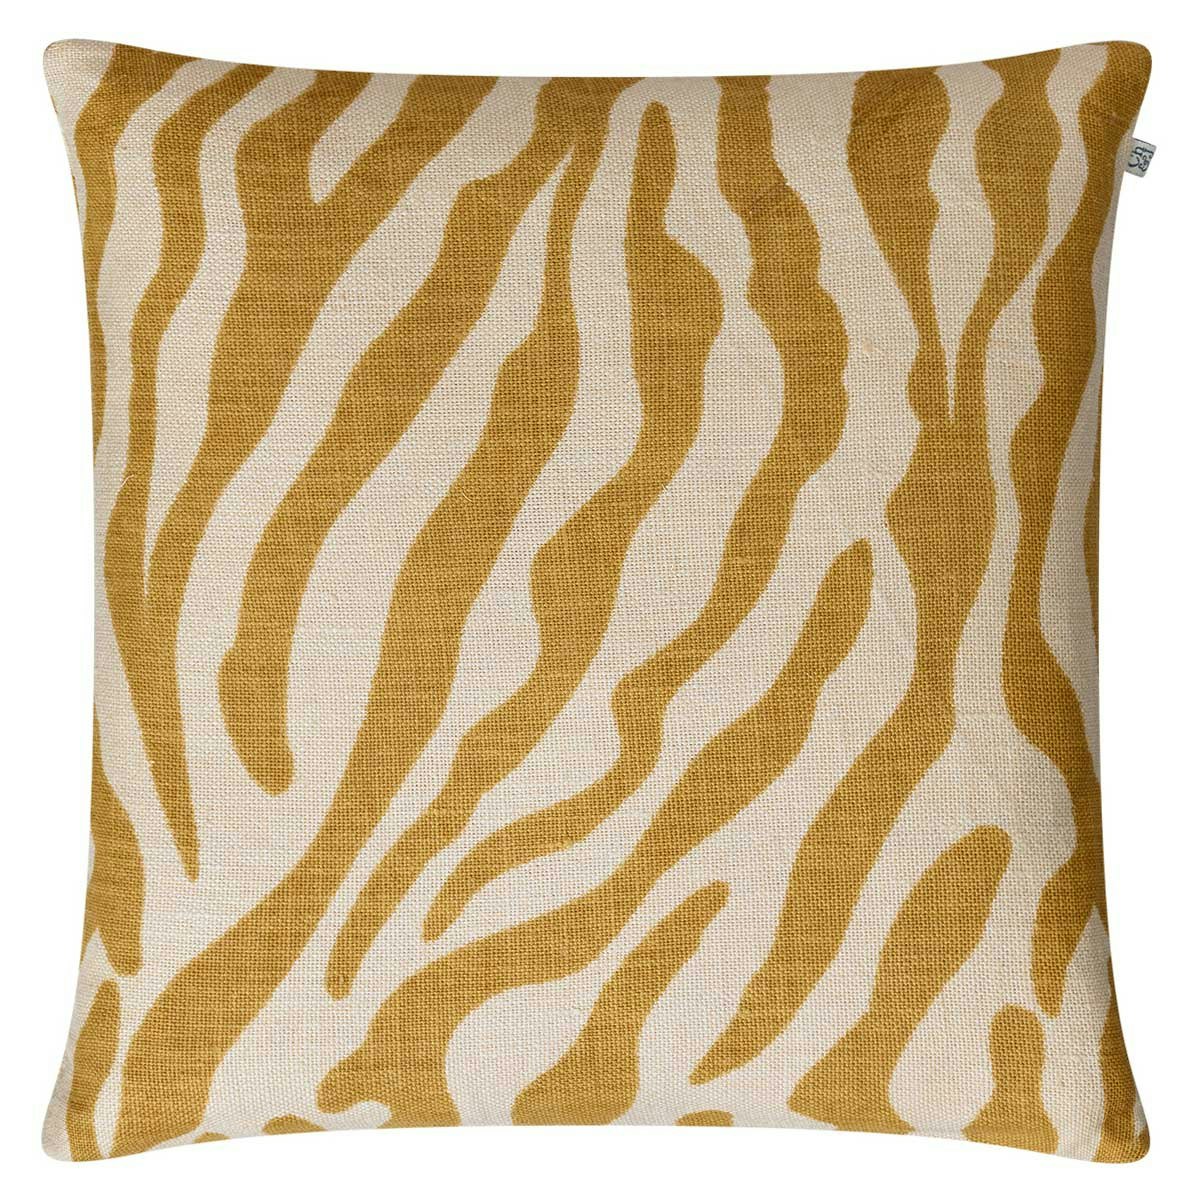 Zebra Cushion Cover 50x50 cm, Spicy Yellow